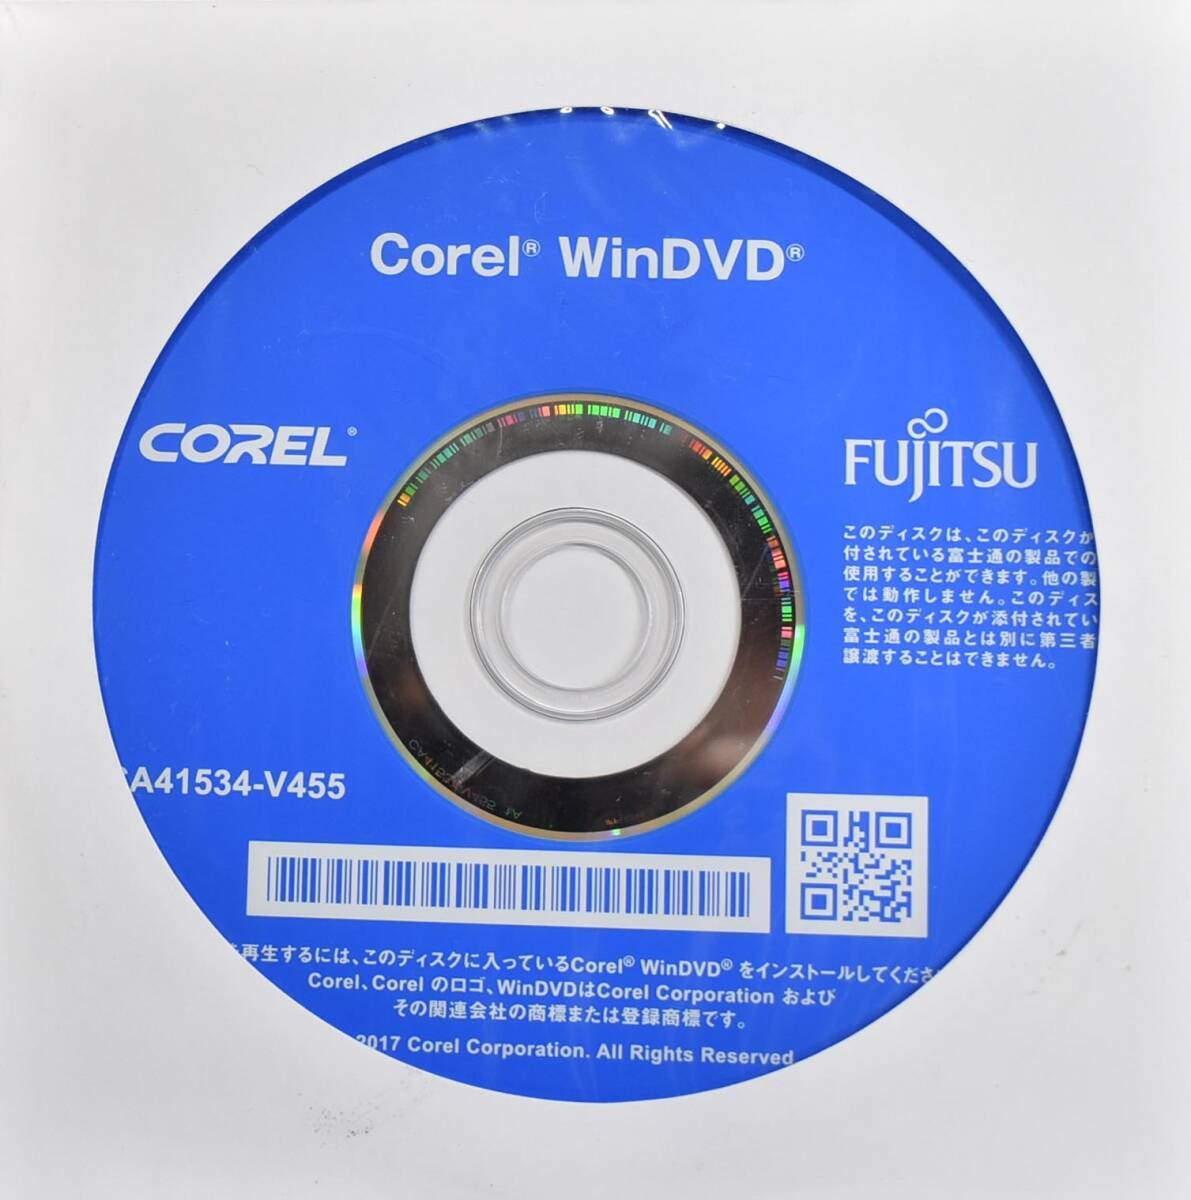 ( стоимость доставки включена  )  Fujitsu  Windows10  оснащен PC (LIFEBOOK A748 A577 A747) комплектующие  Corel WinDVD (DVD воспроизведение  мягкий ) 2017 год выпуска  (V455) ( труба  :PS80 x9s